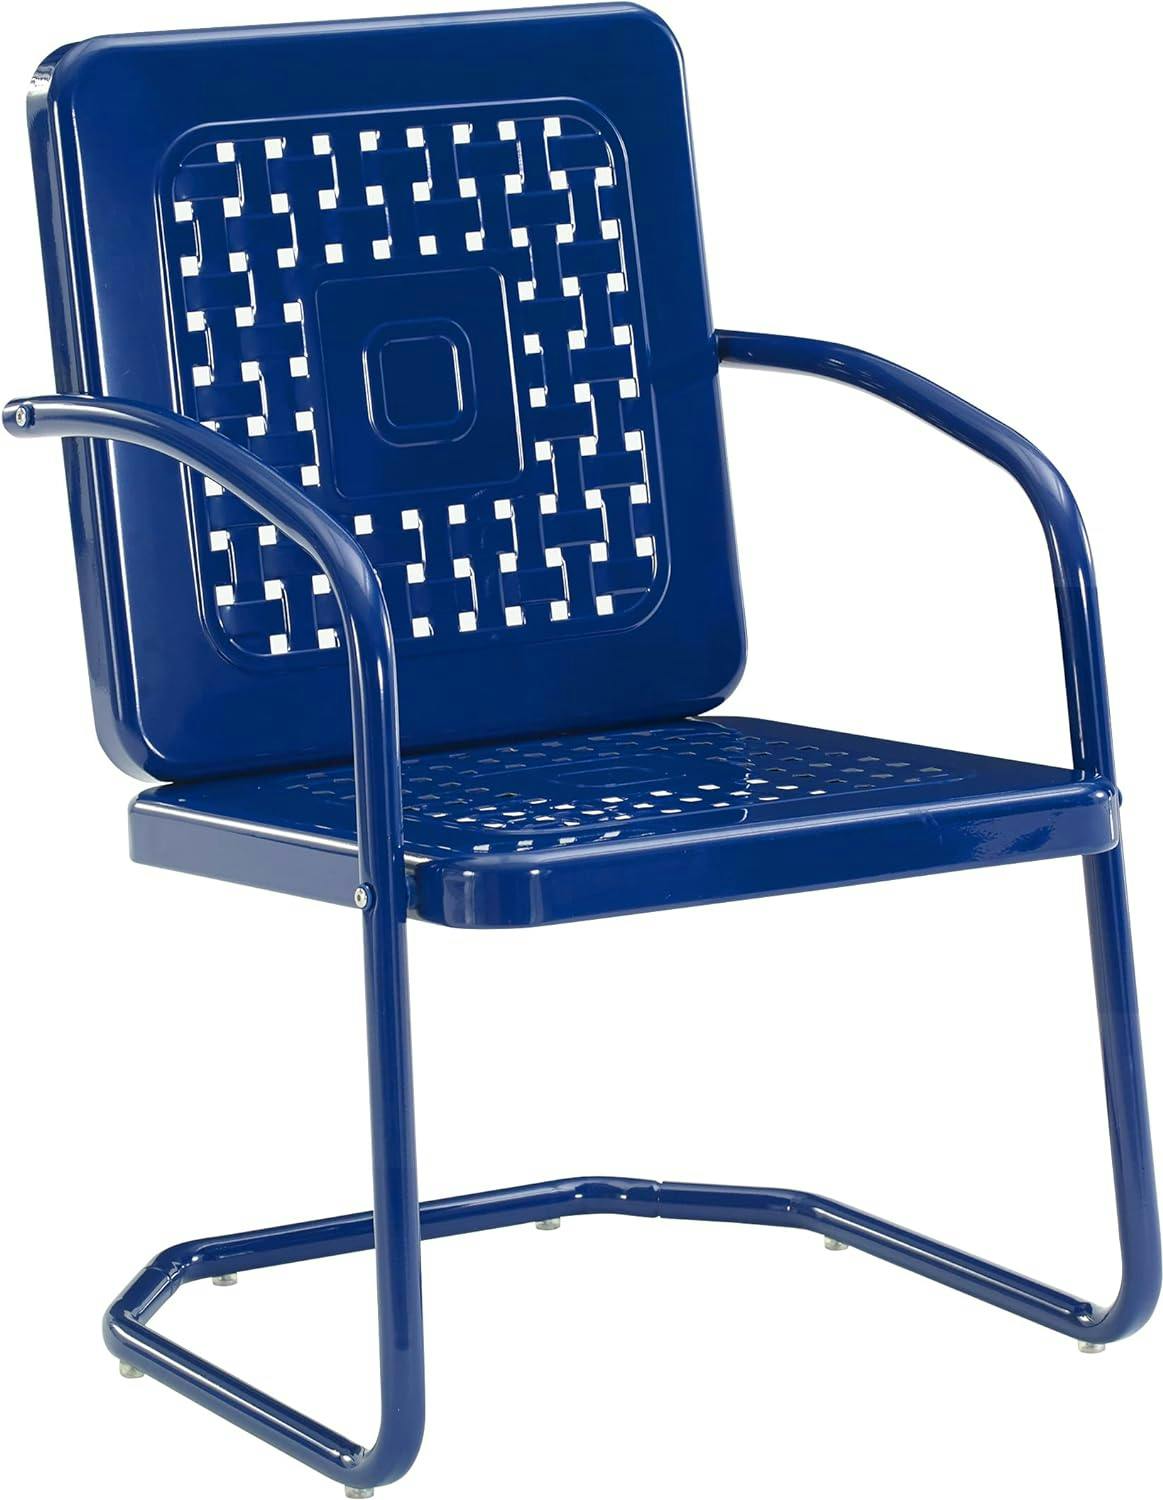 Vintage Navy Retro Metal Outdoor Chair Set with Basket Weave Design